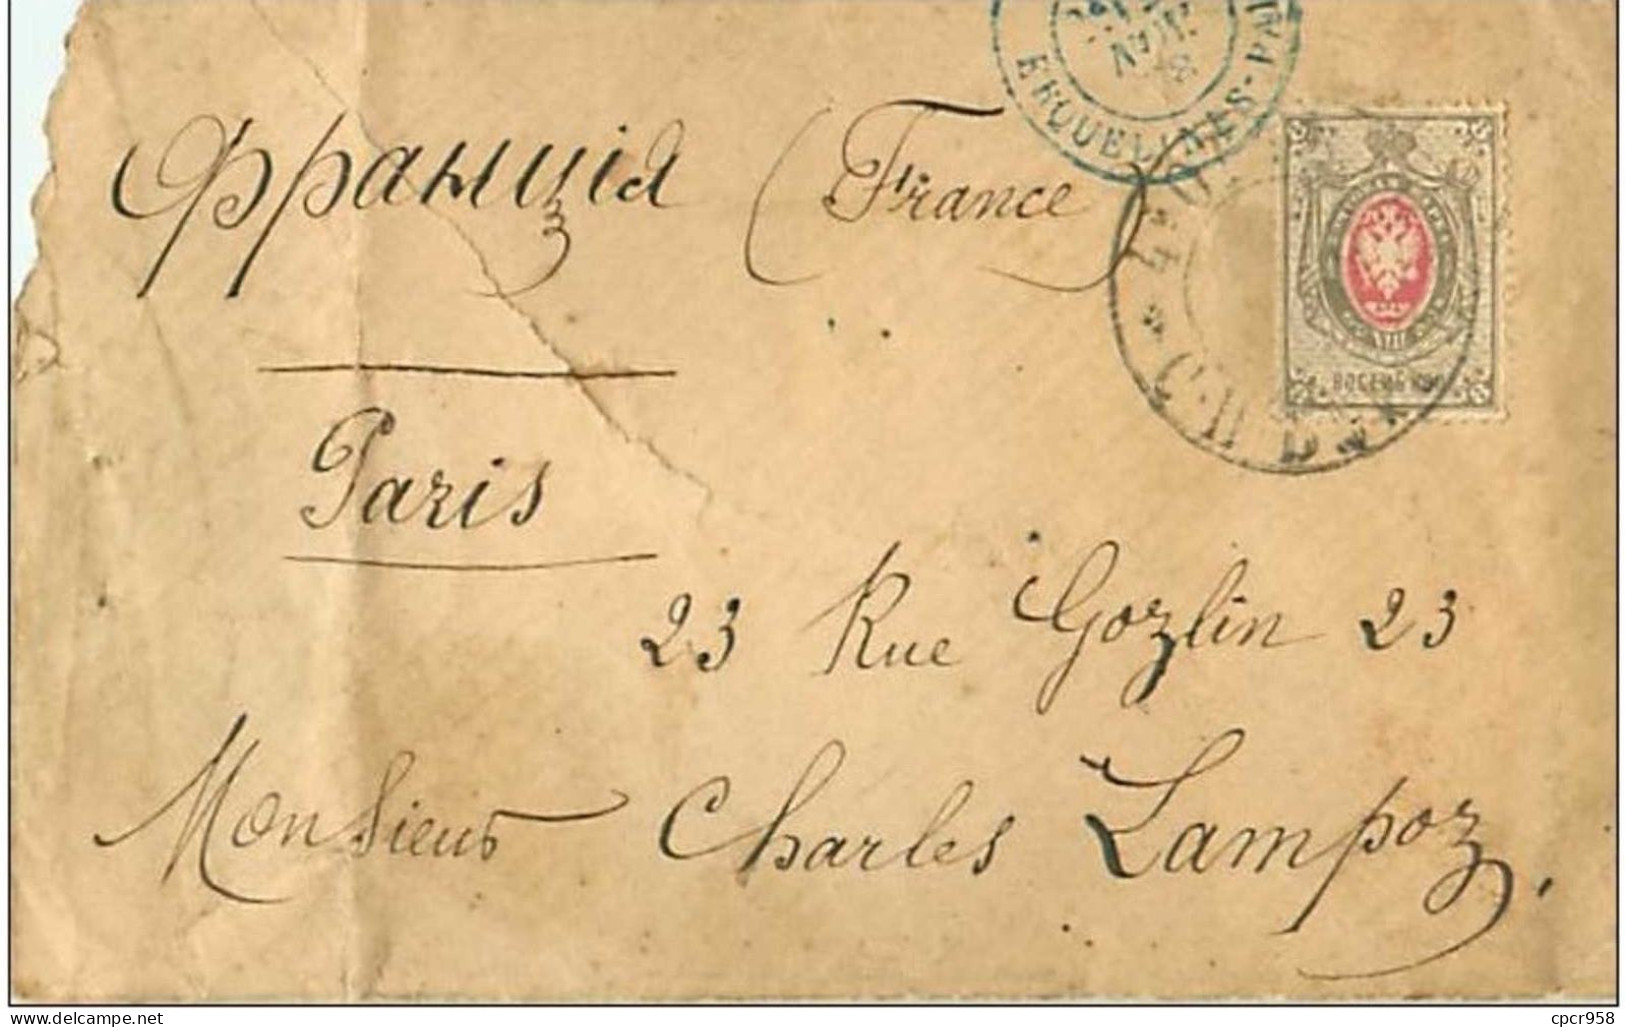 TIMBRES.n°2839.RUSSIE.ERQUELISIA PARIS.1878.EN L'ETAT - Storia Postale